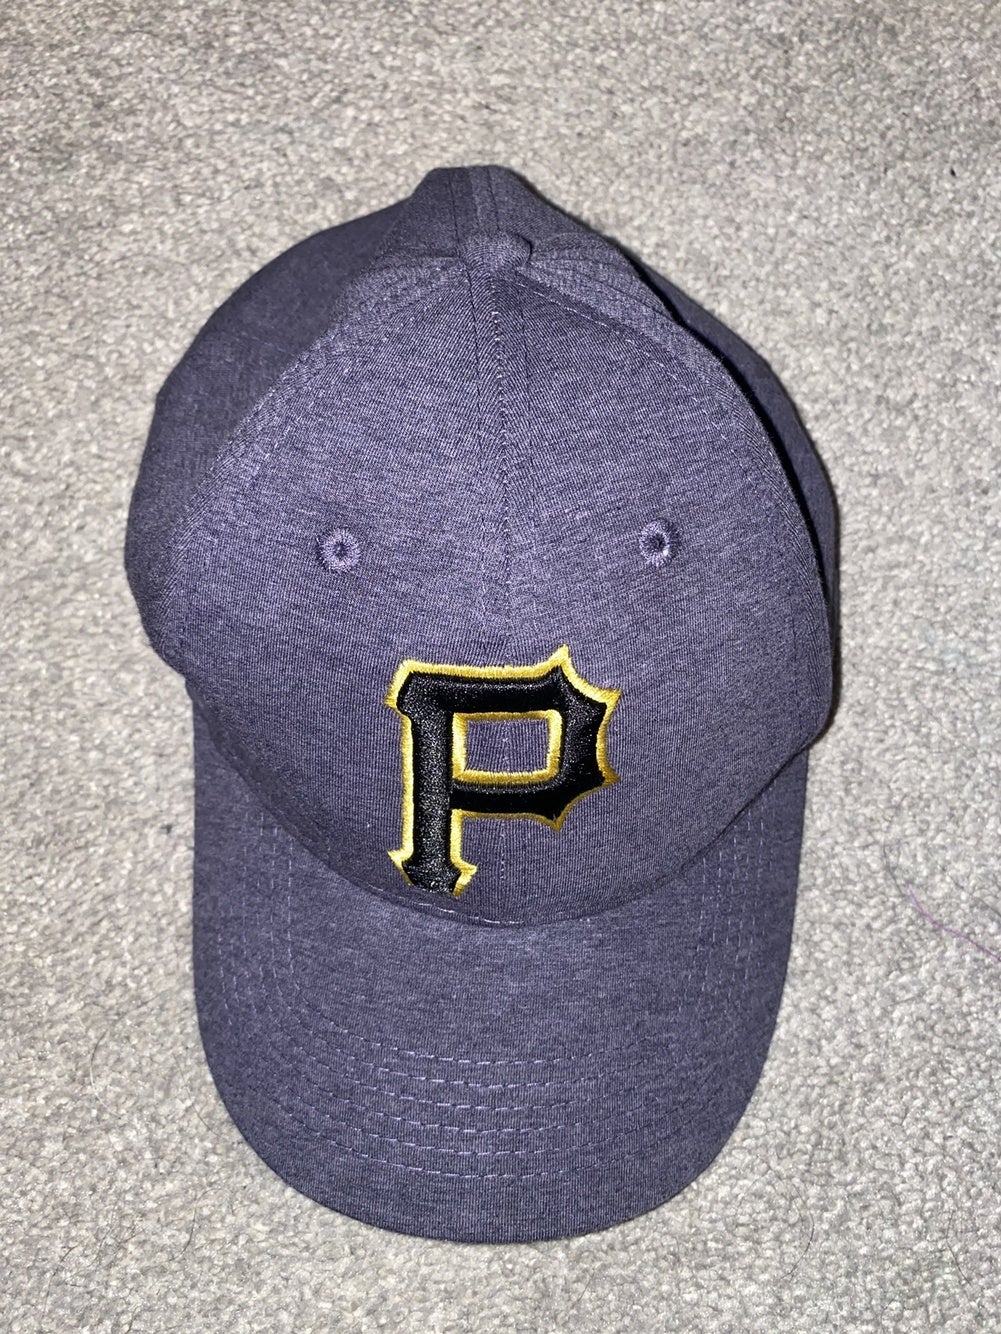 Vintage Pittsburgh Pirates Starter Spring training Stitched Retro Jersey  large L